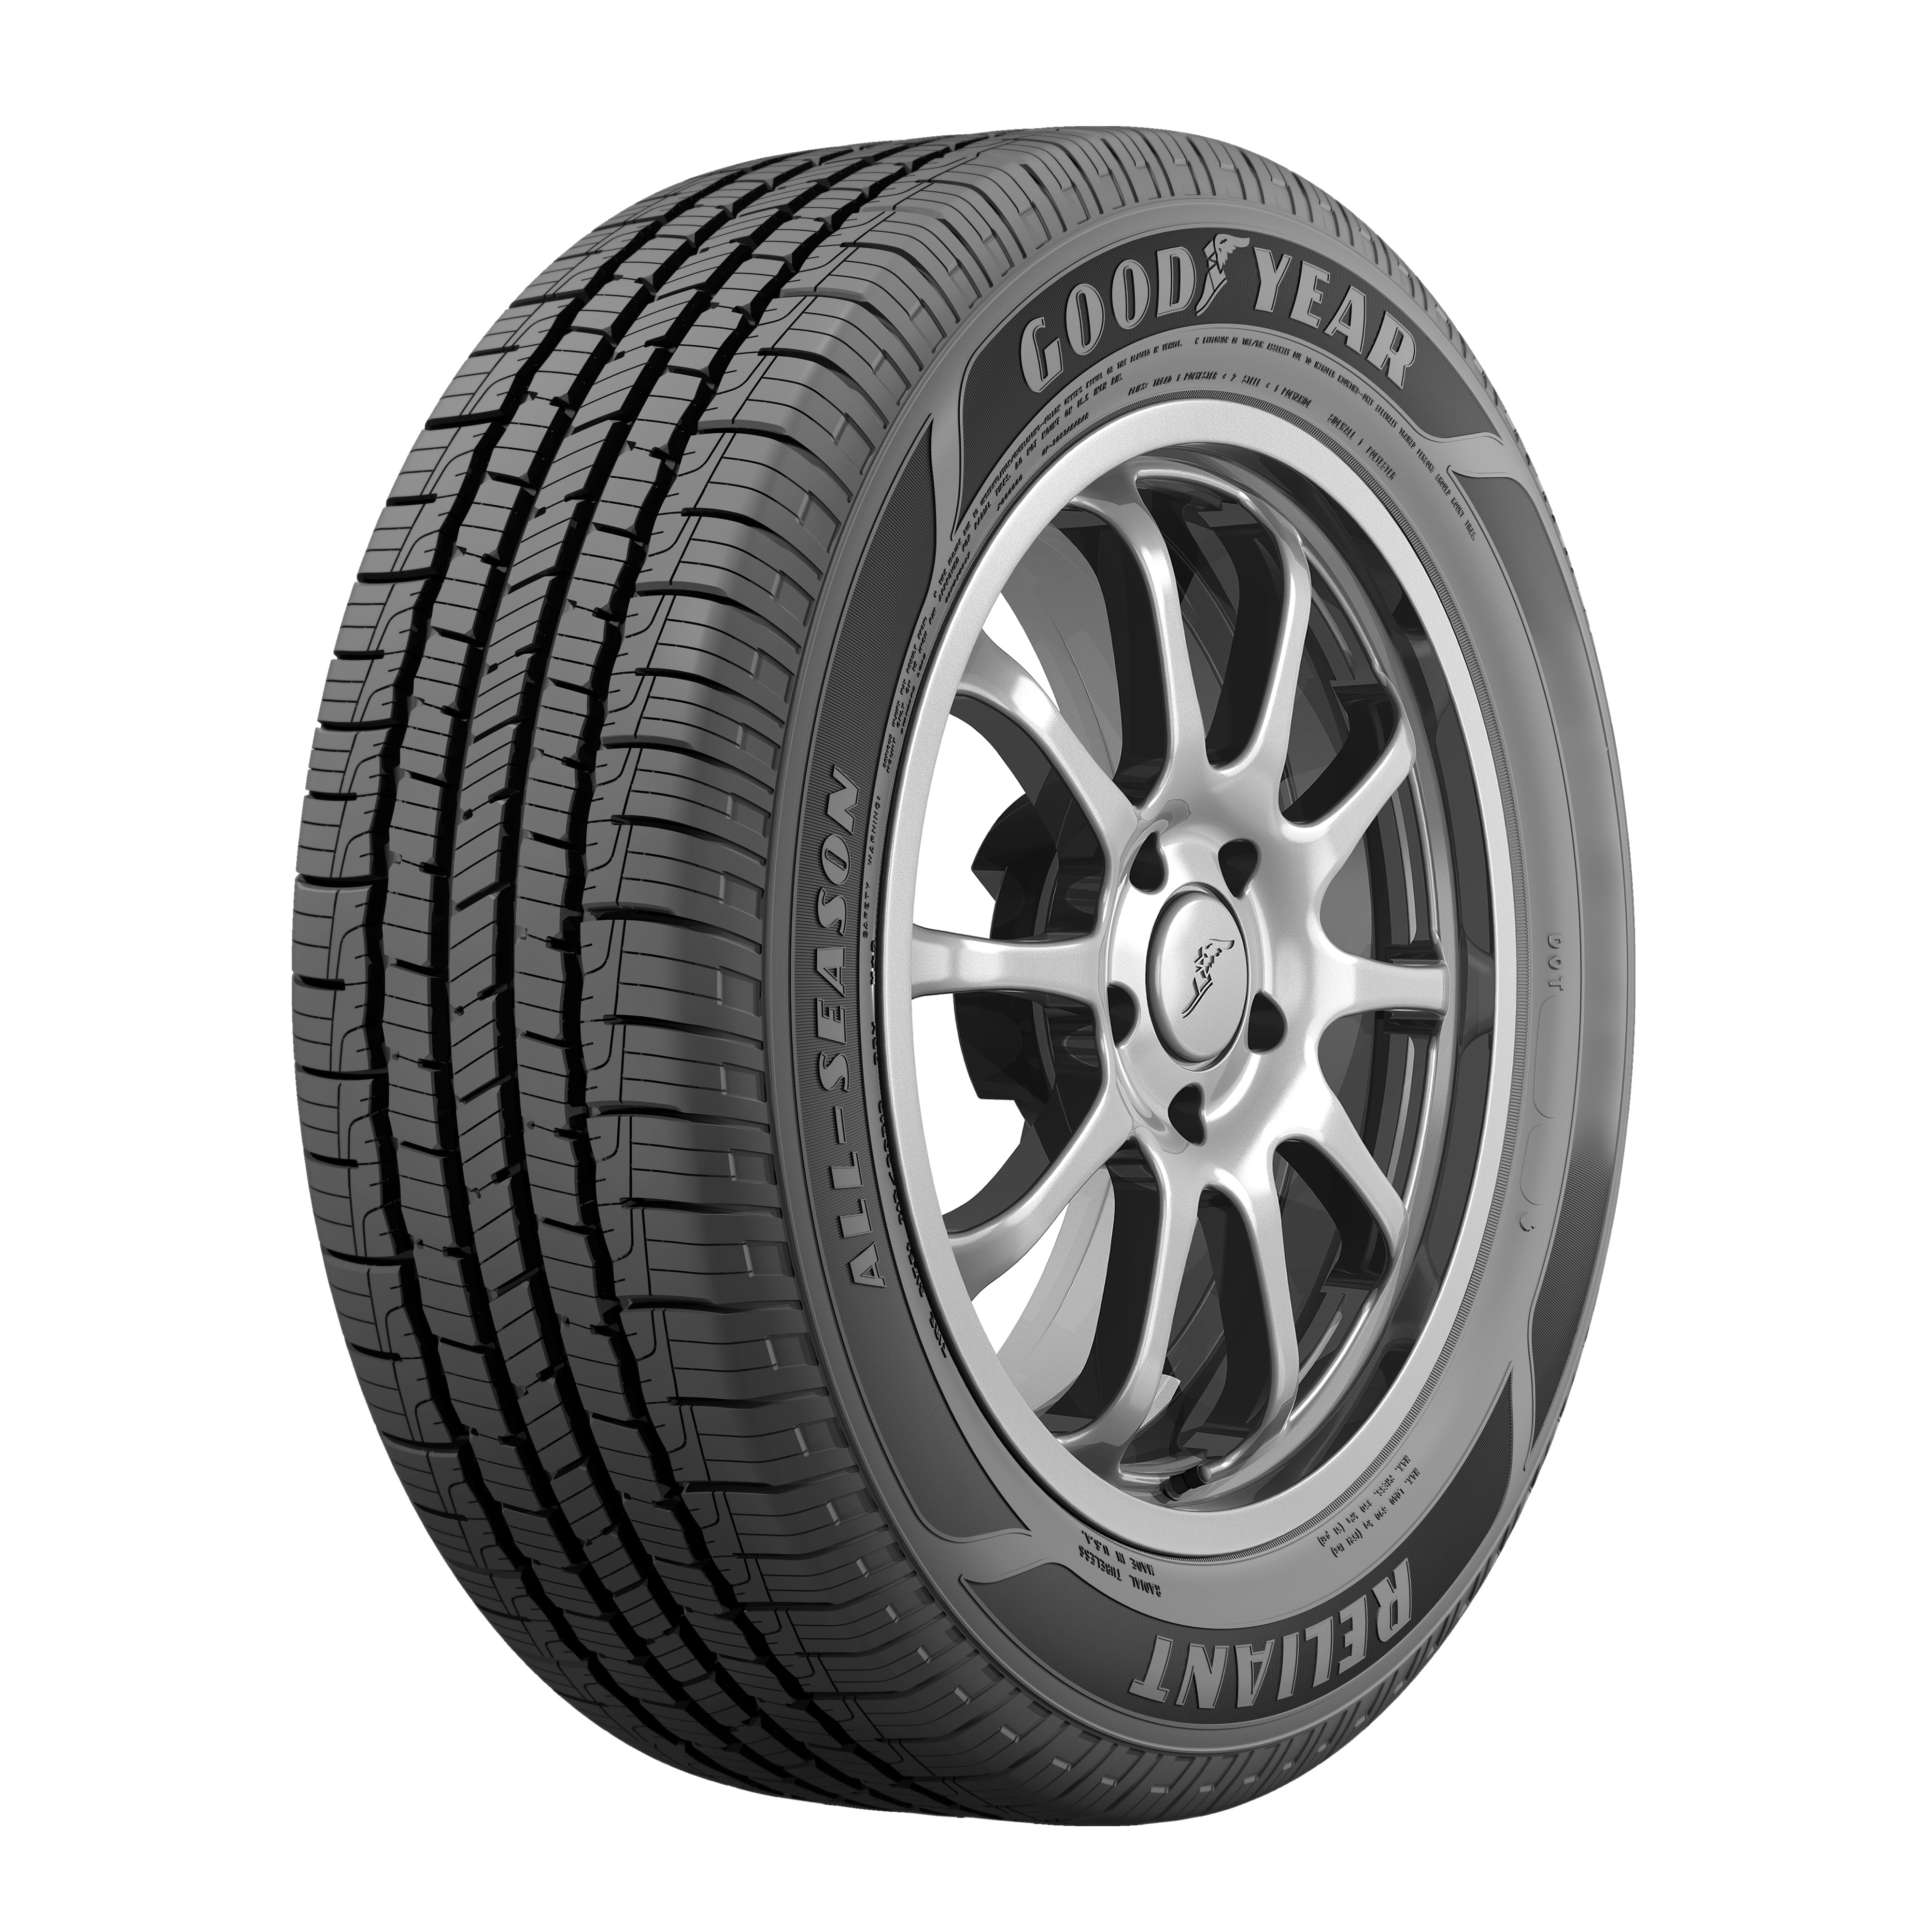 Goodyear Reliant All-Season 215/65R16 98V Tire - Walmart.com